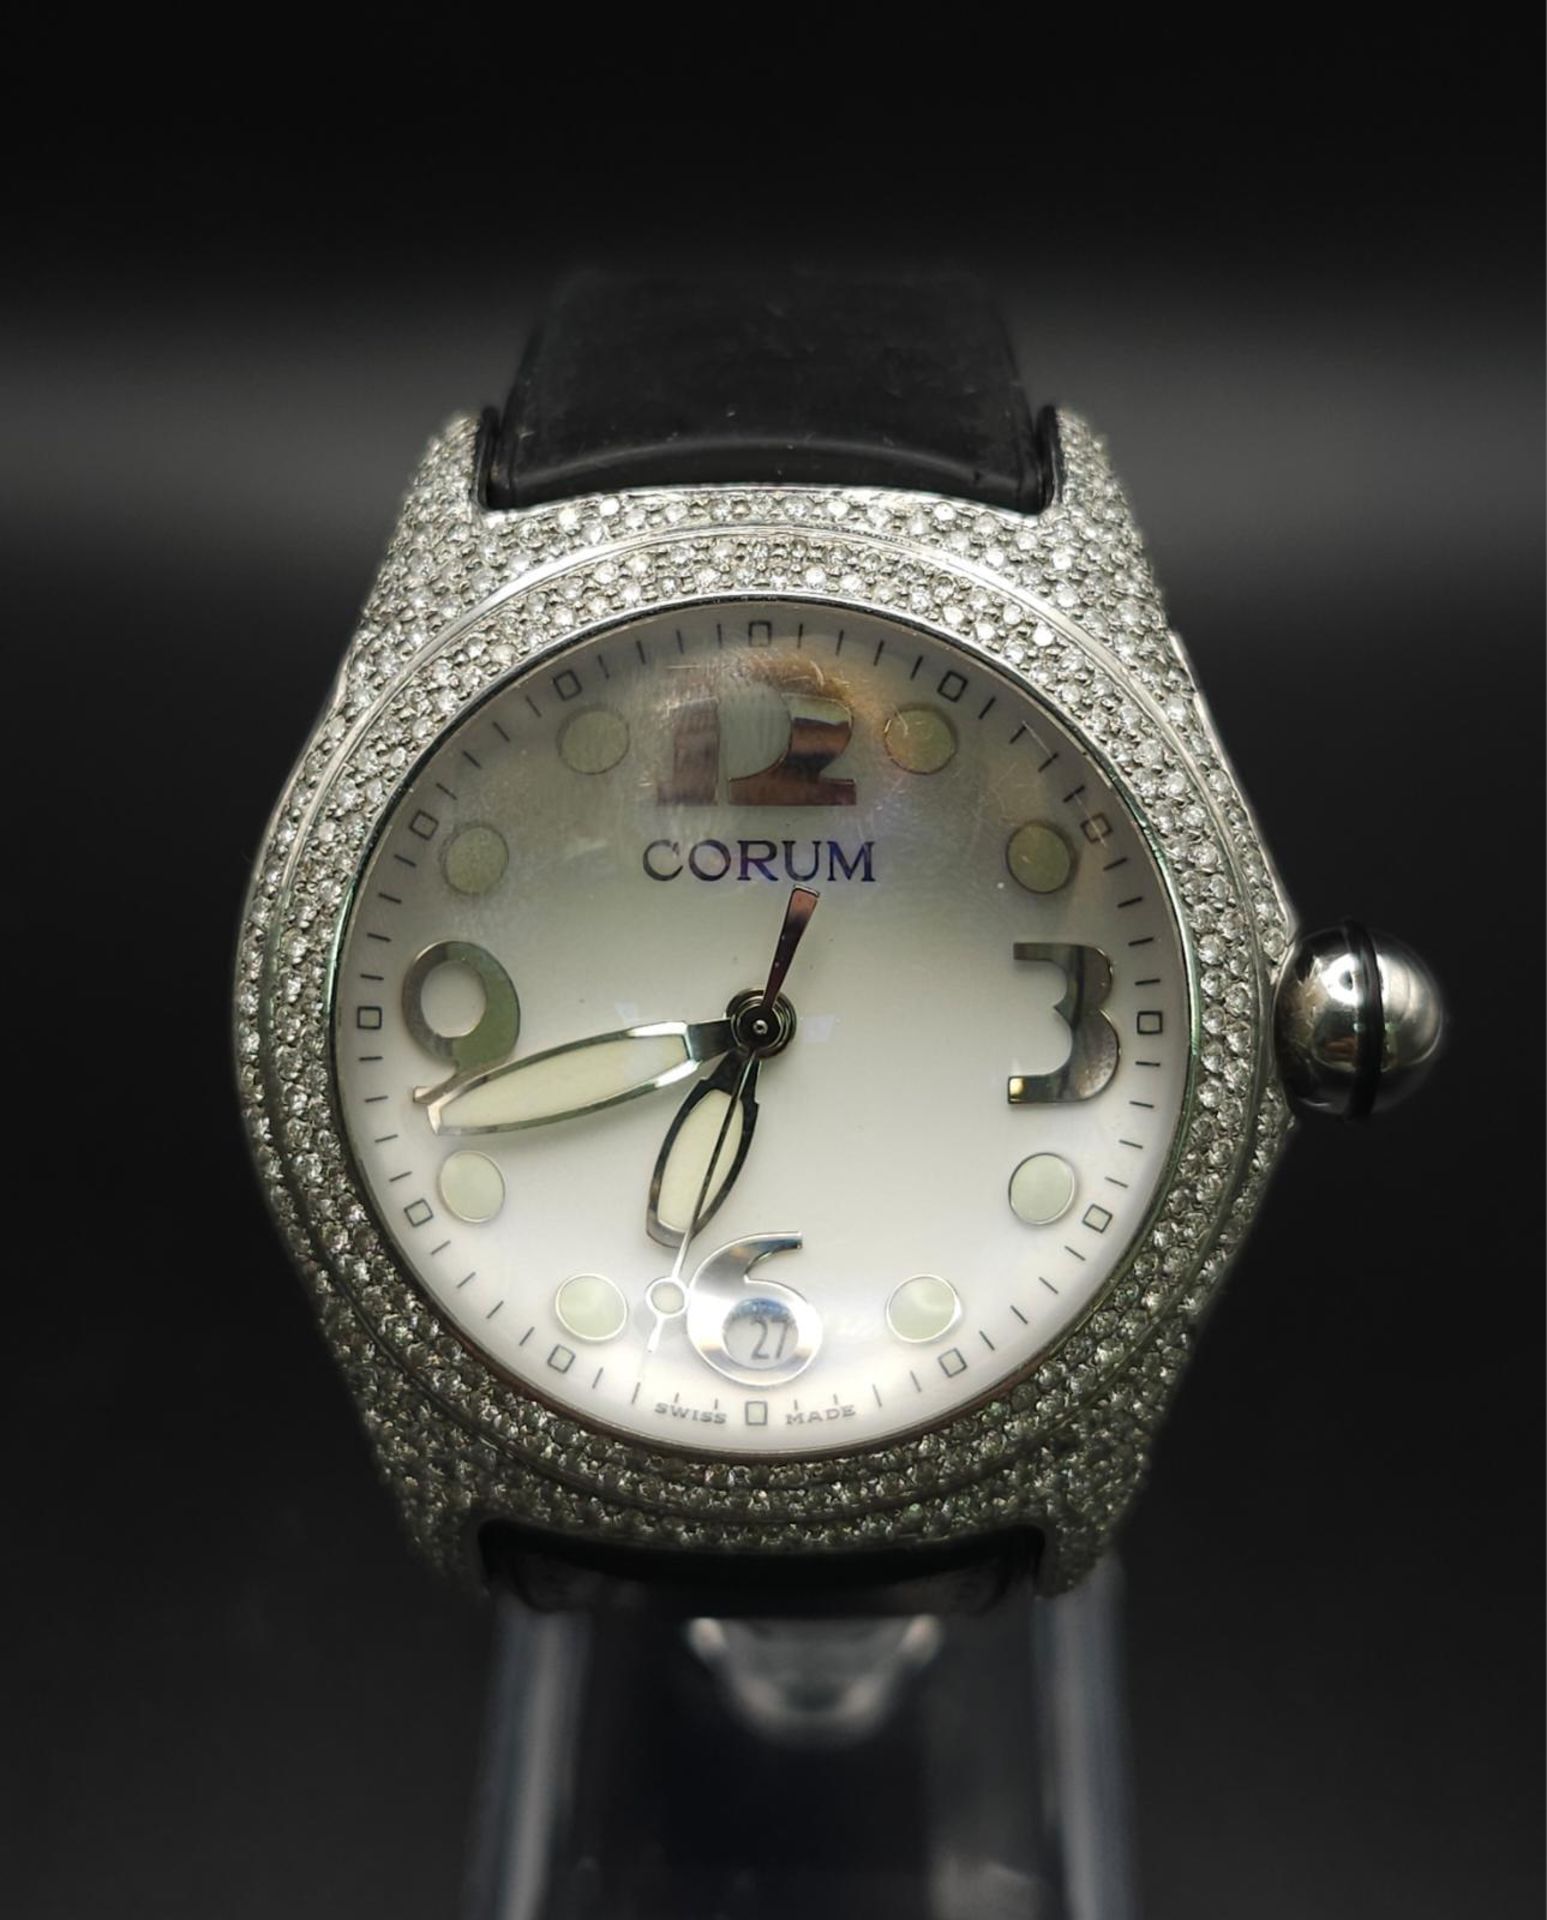 A Corum Boutique Diamond Ladies Watch. Black leather strap. Stainless steel diamond encrusted